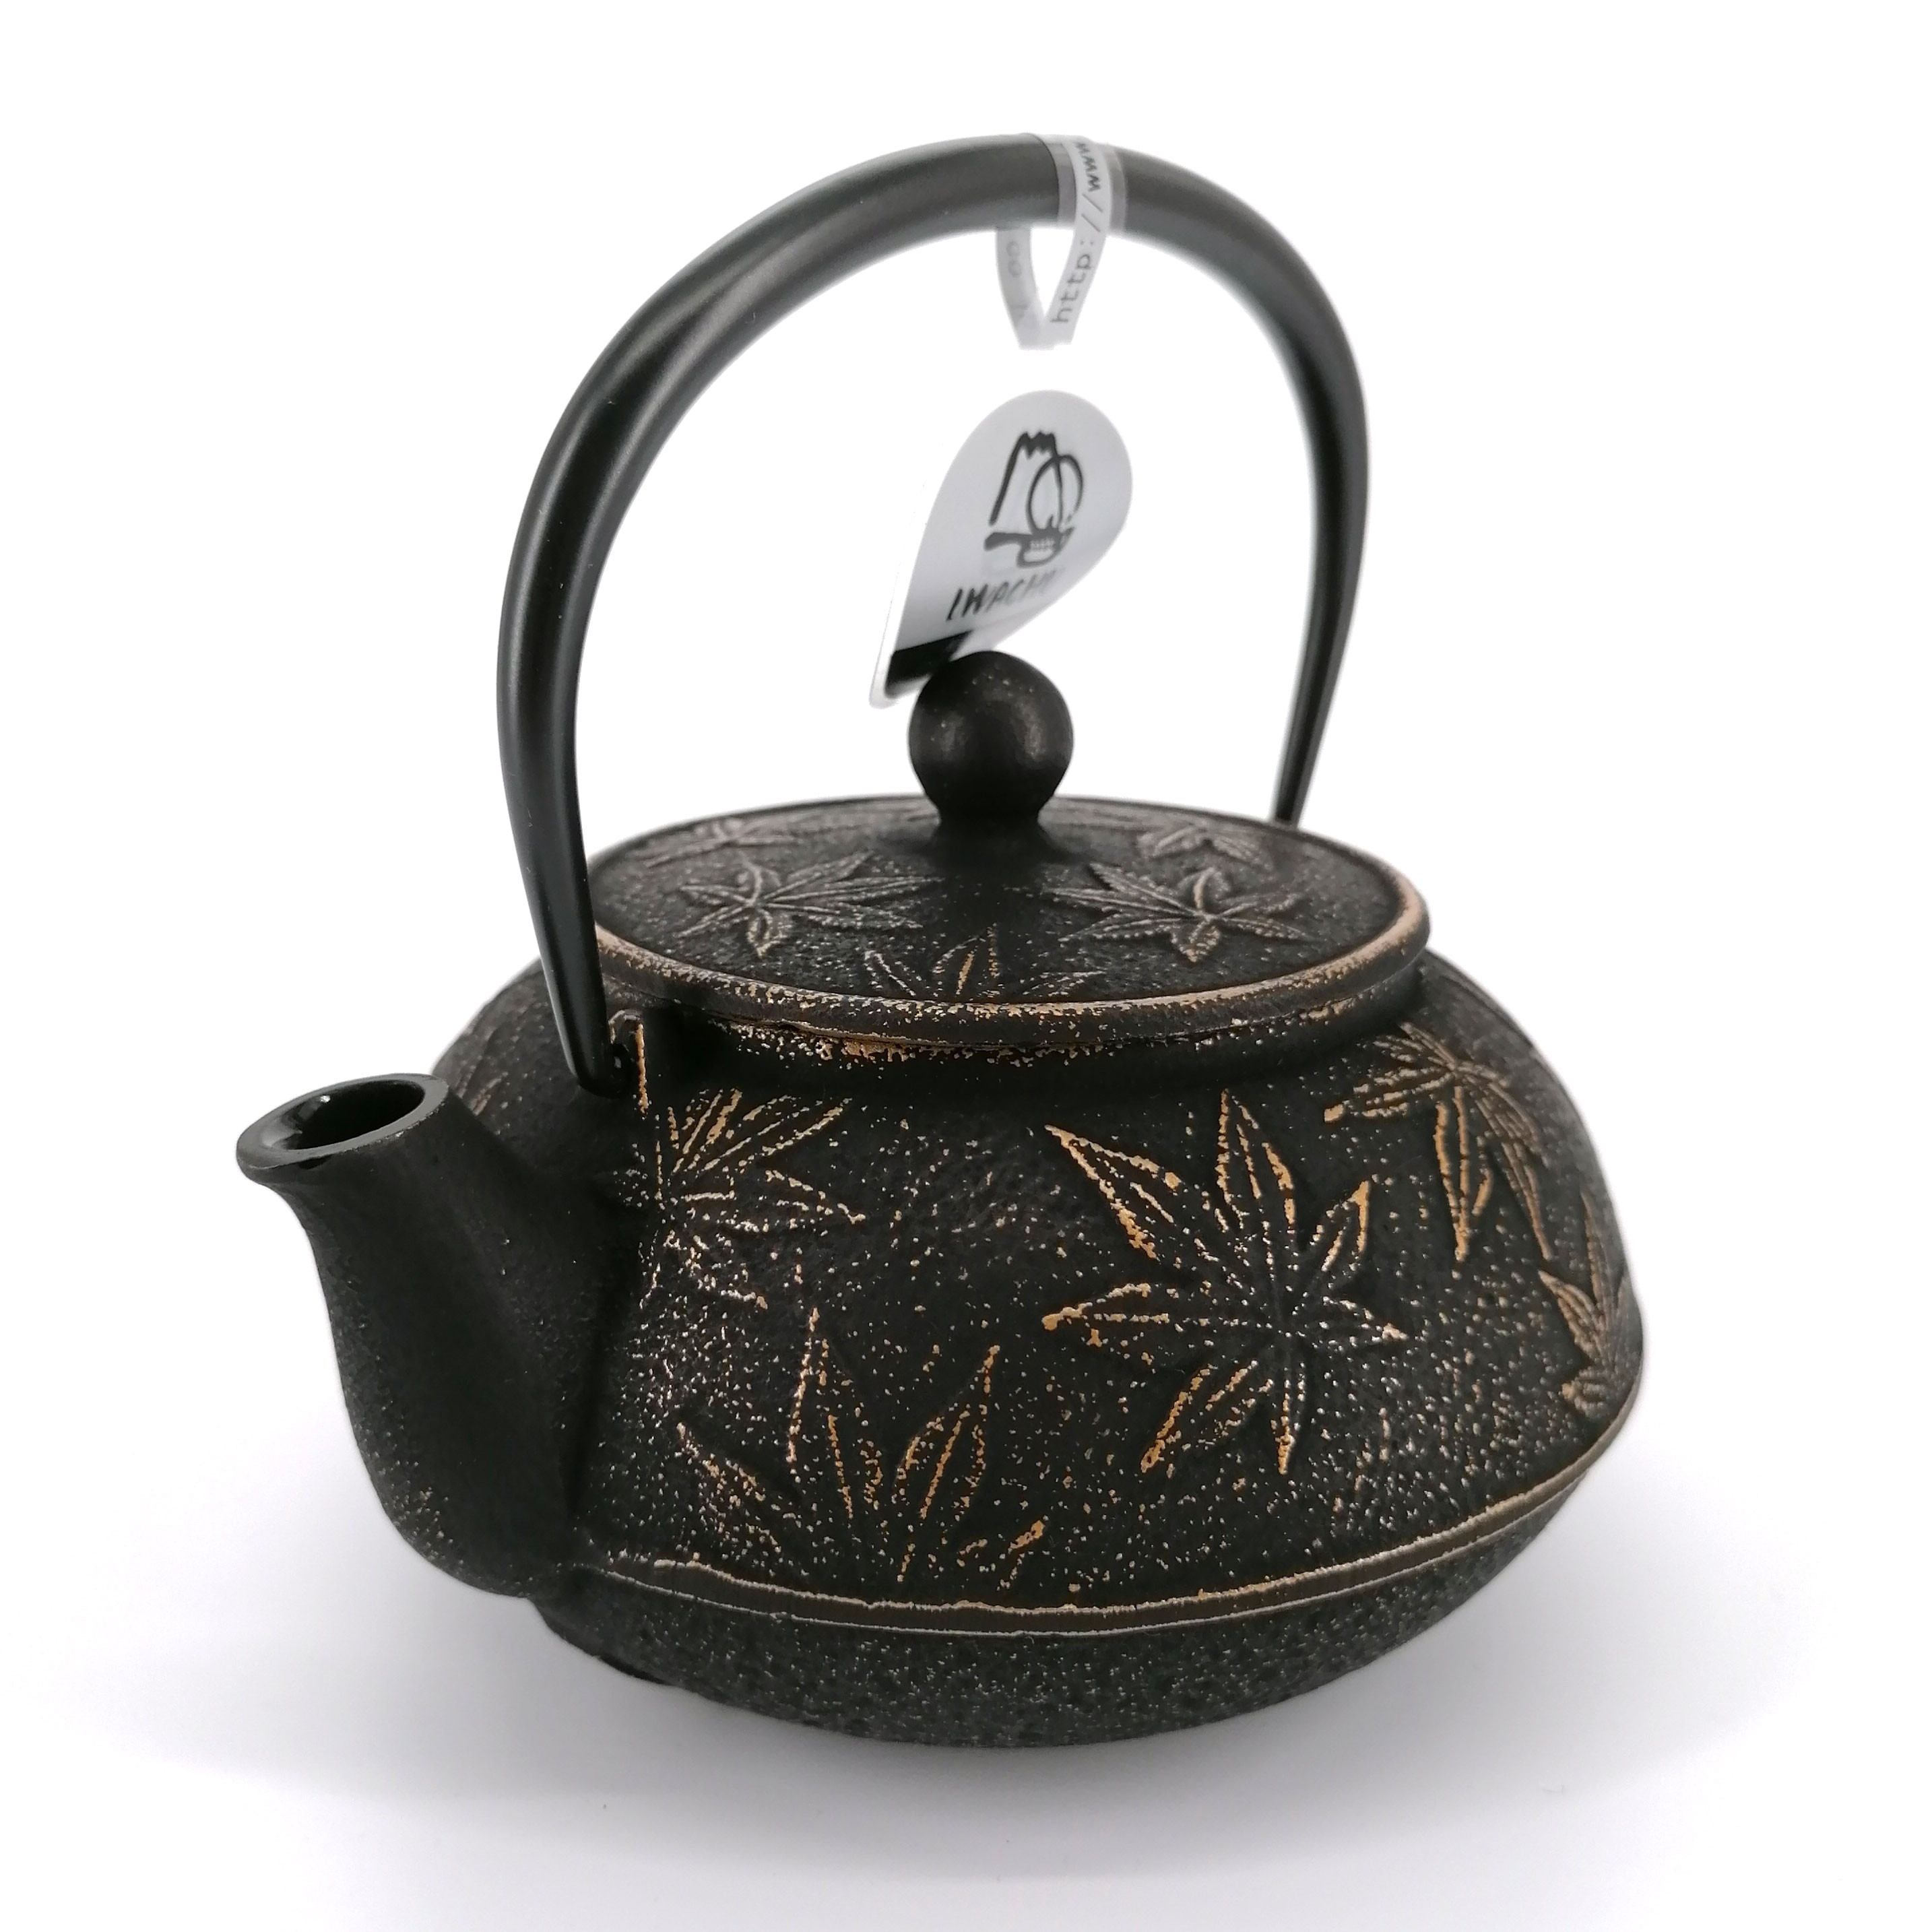 https://kyotoboutique.fr/55598/japanese-cast-iron-teapot-iwachu-kaede-065-lt-black-gold.jpg